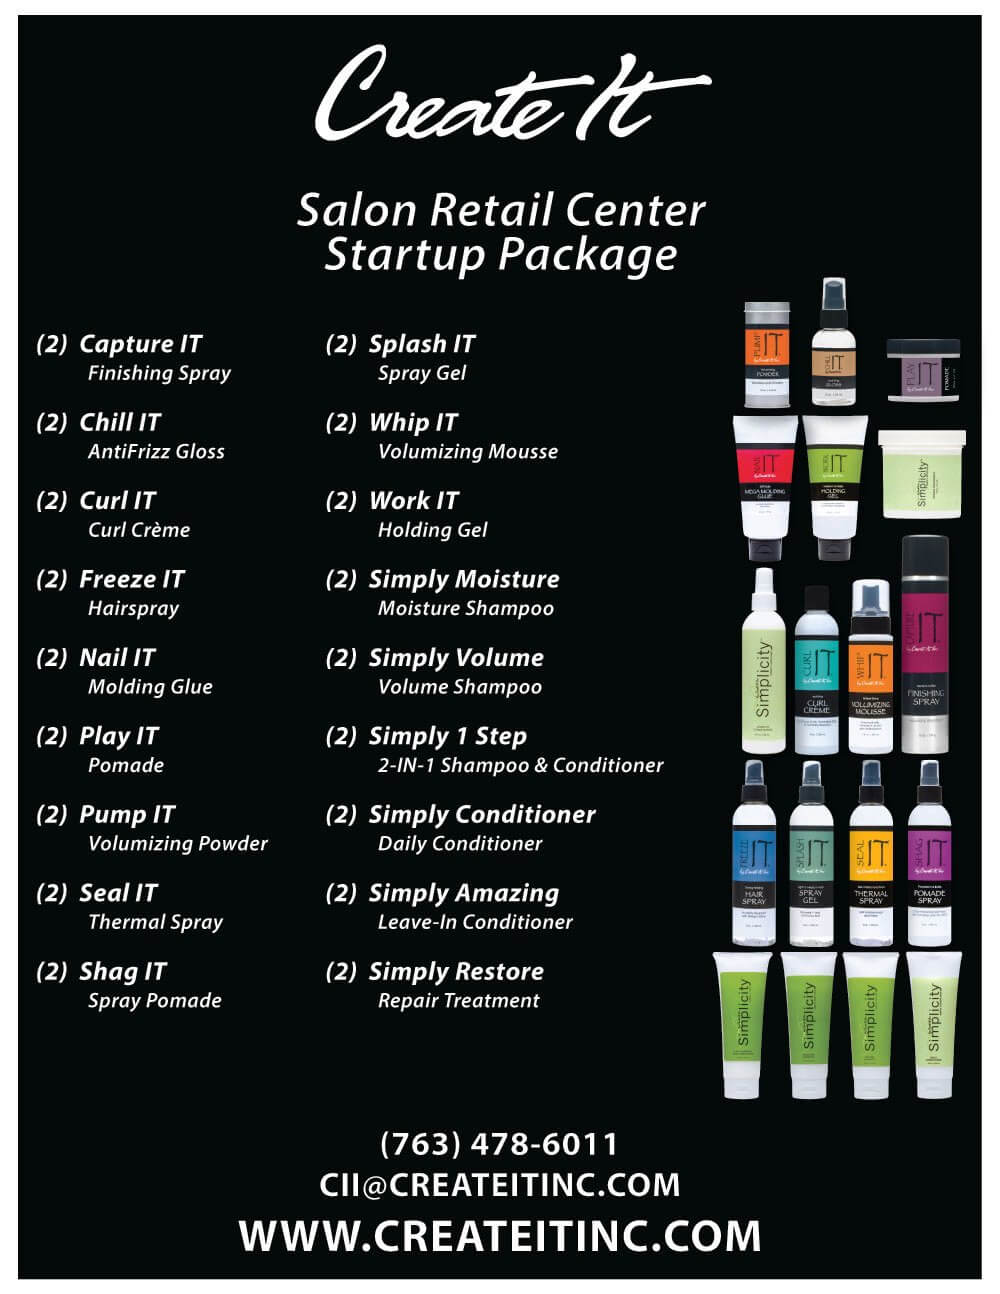 Create IT Salon Retail Center Startup Package